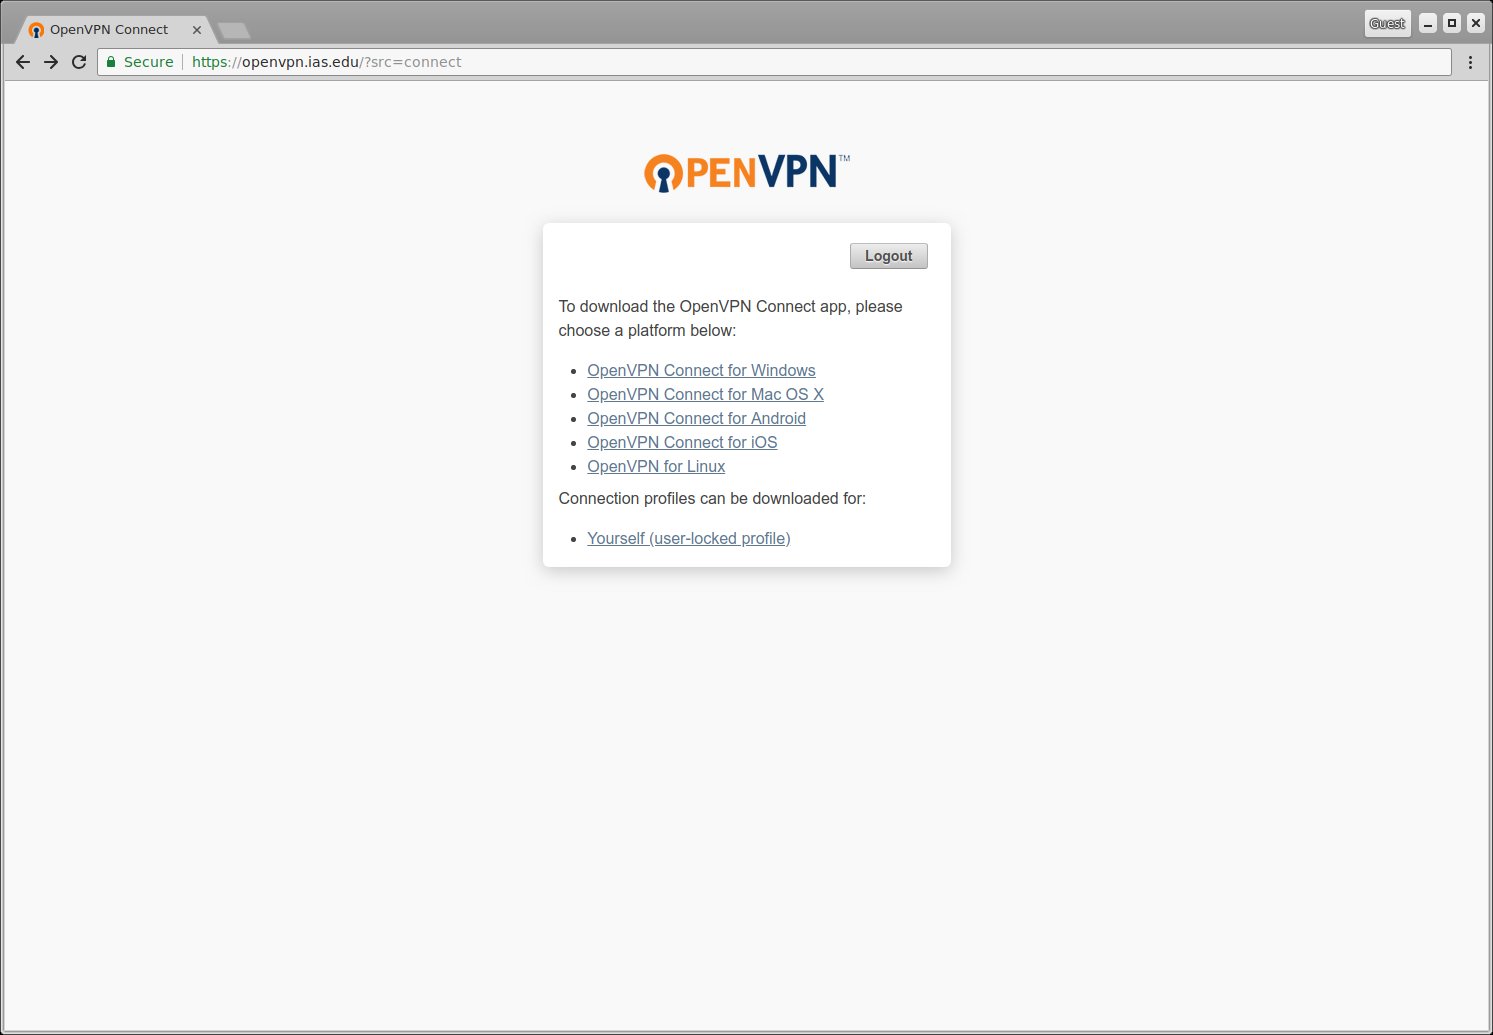 free openvpn service linux